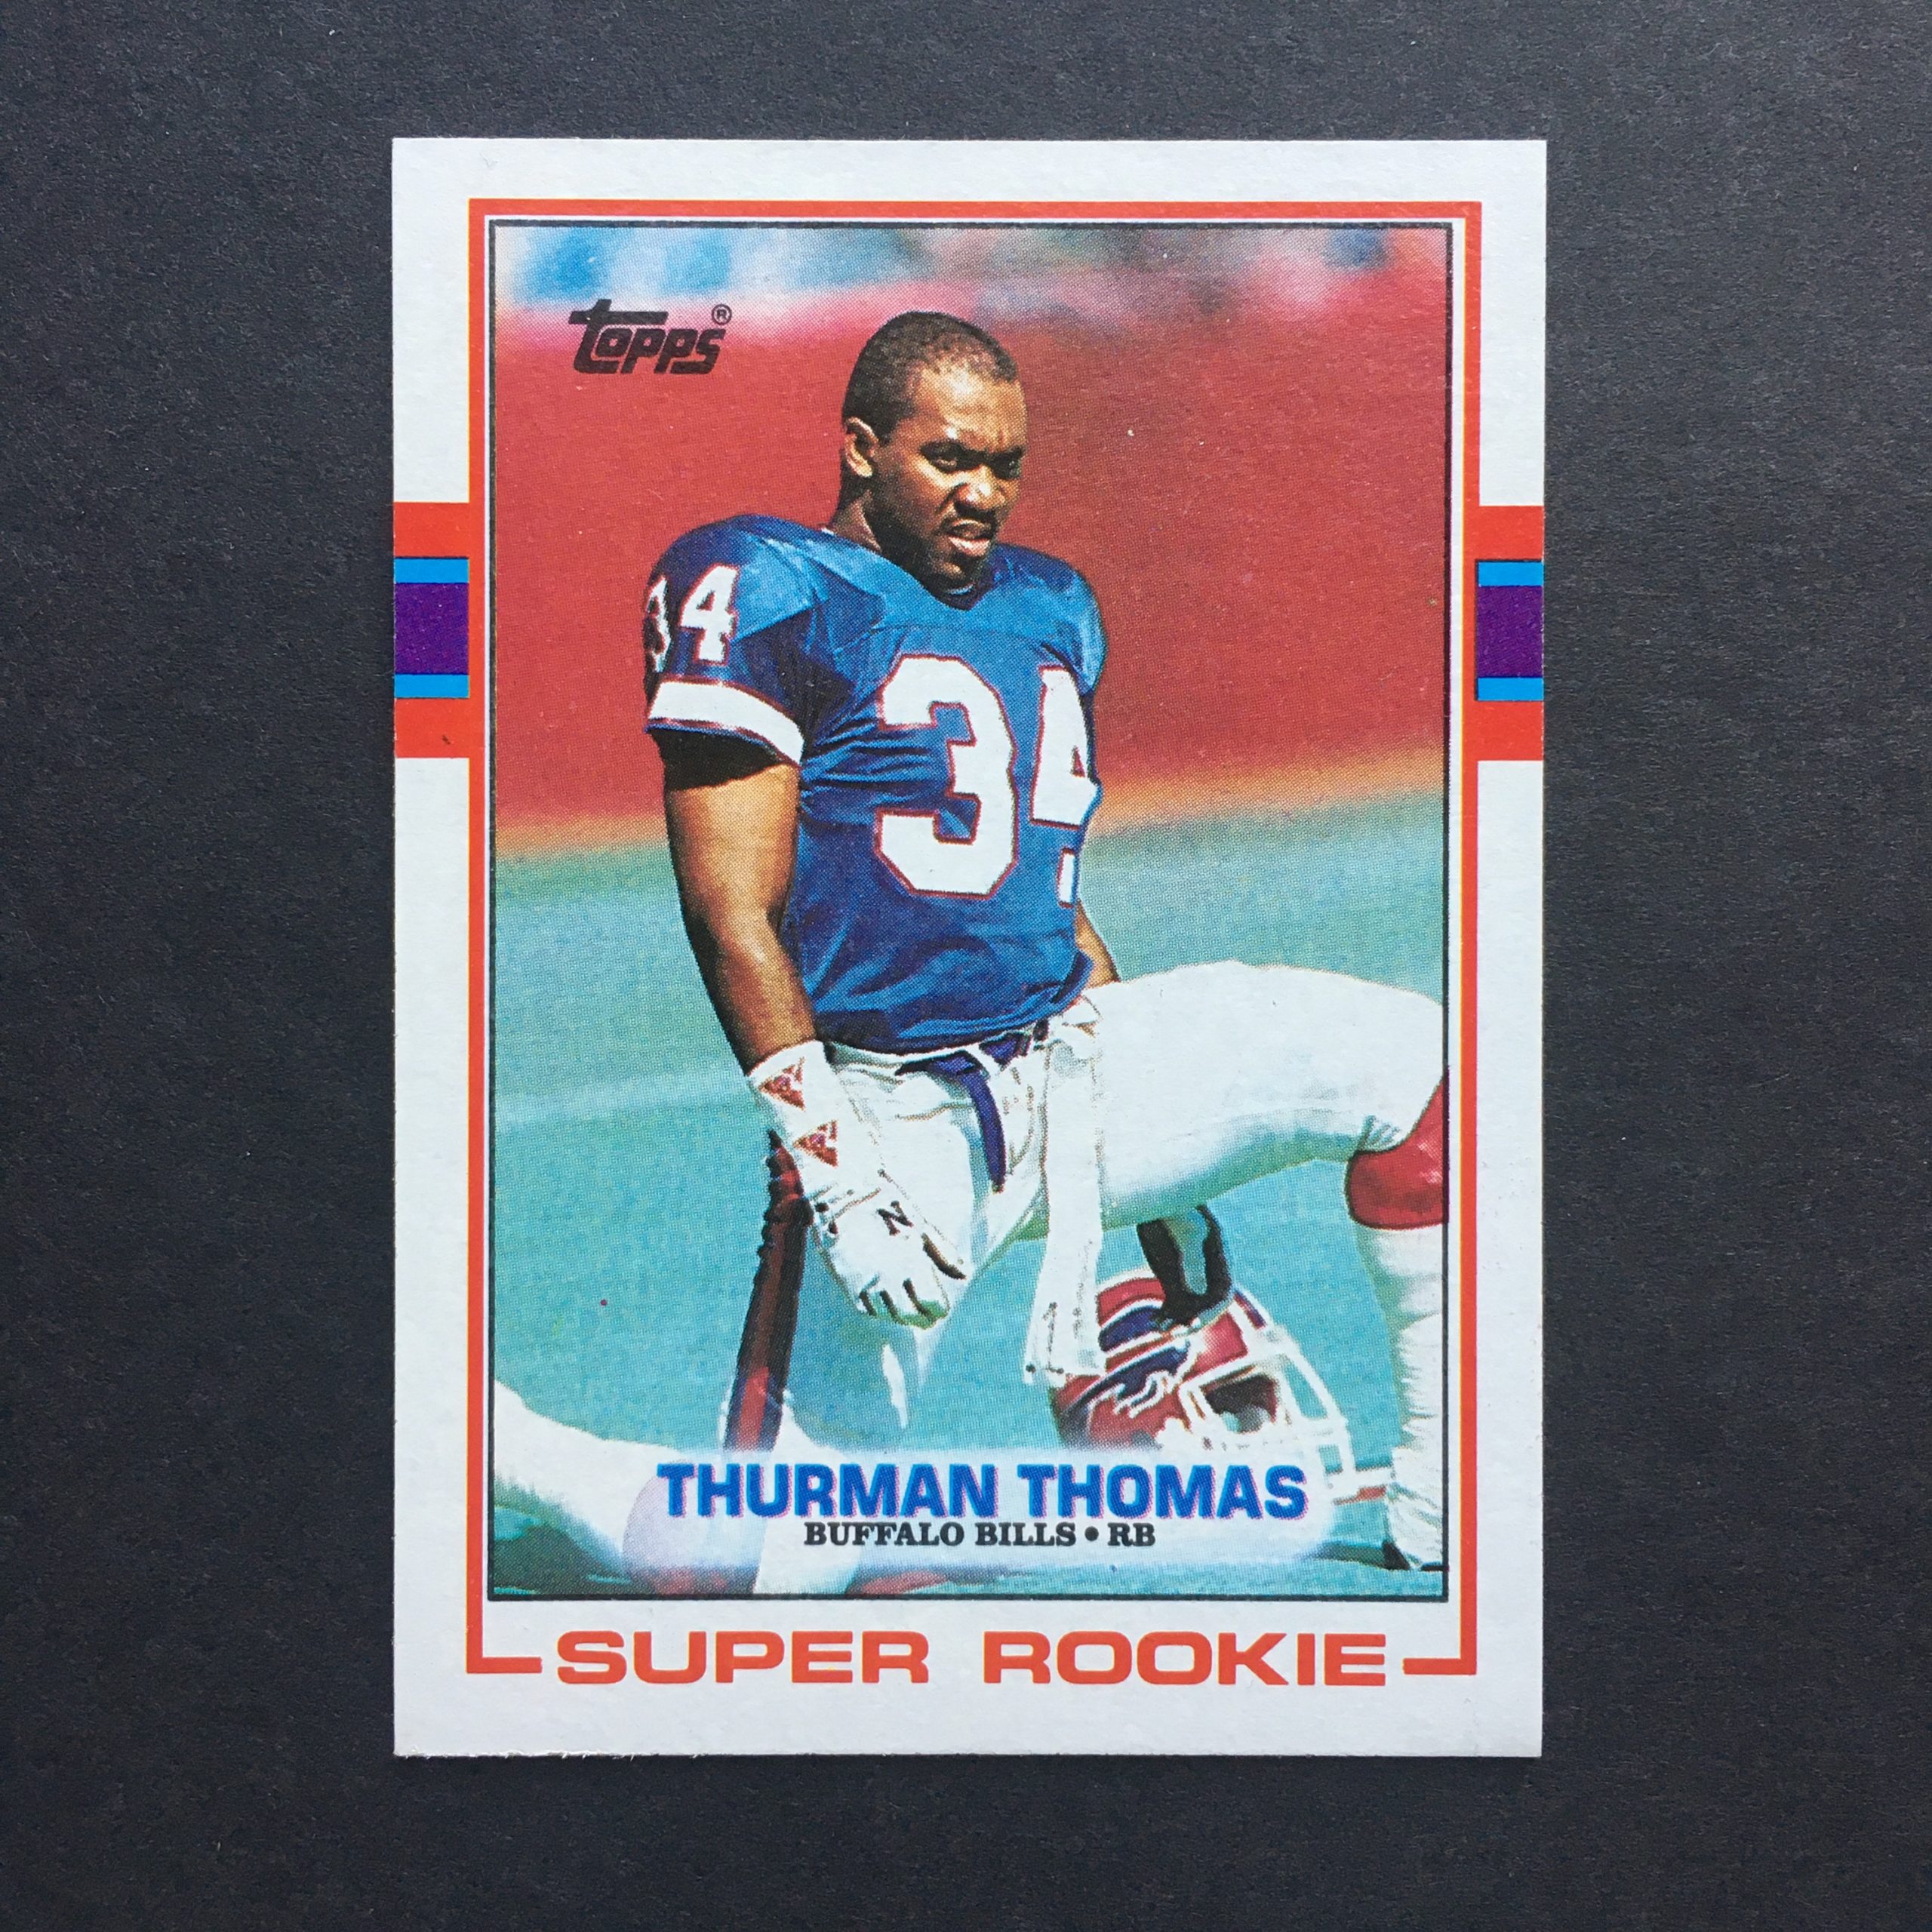 Thurman Thomas 1989 Topps Rookie Card